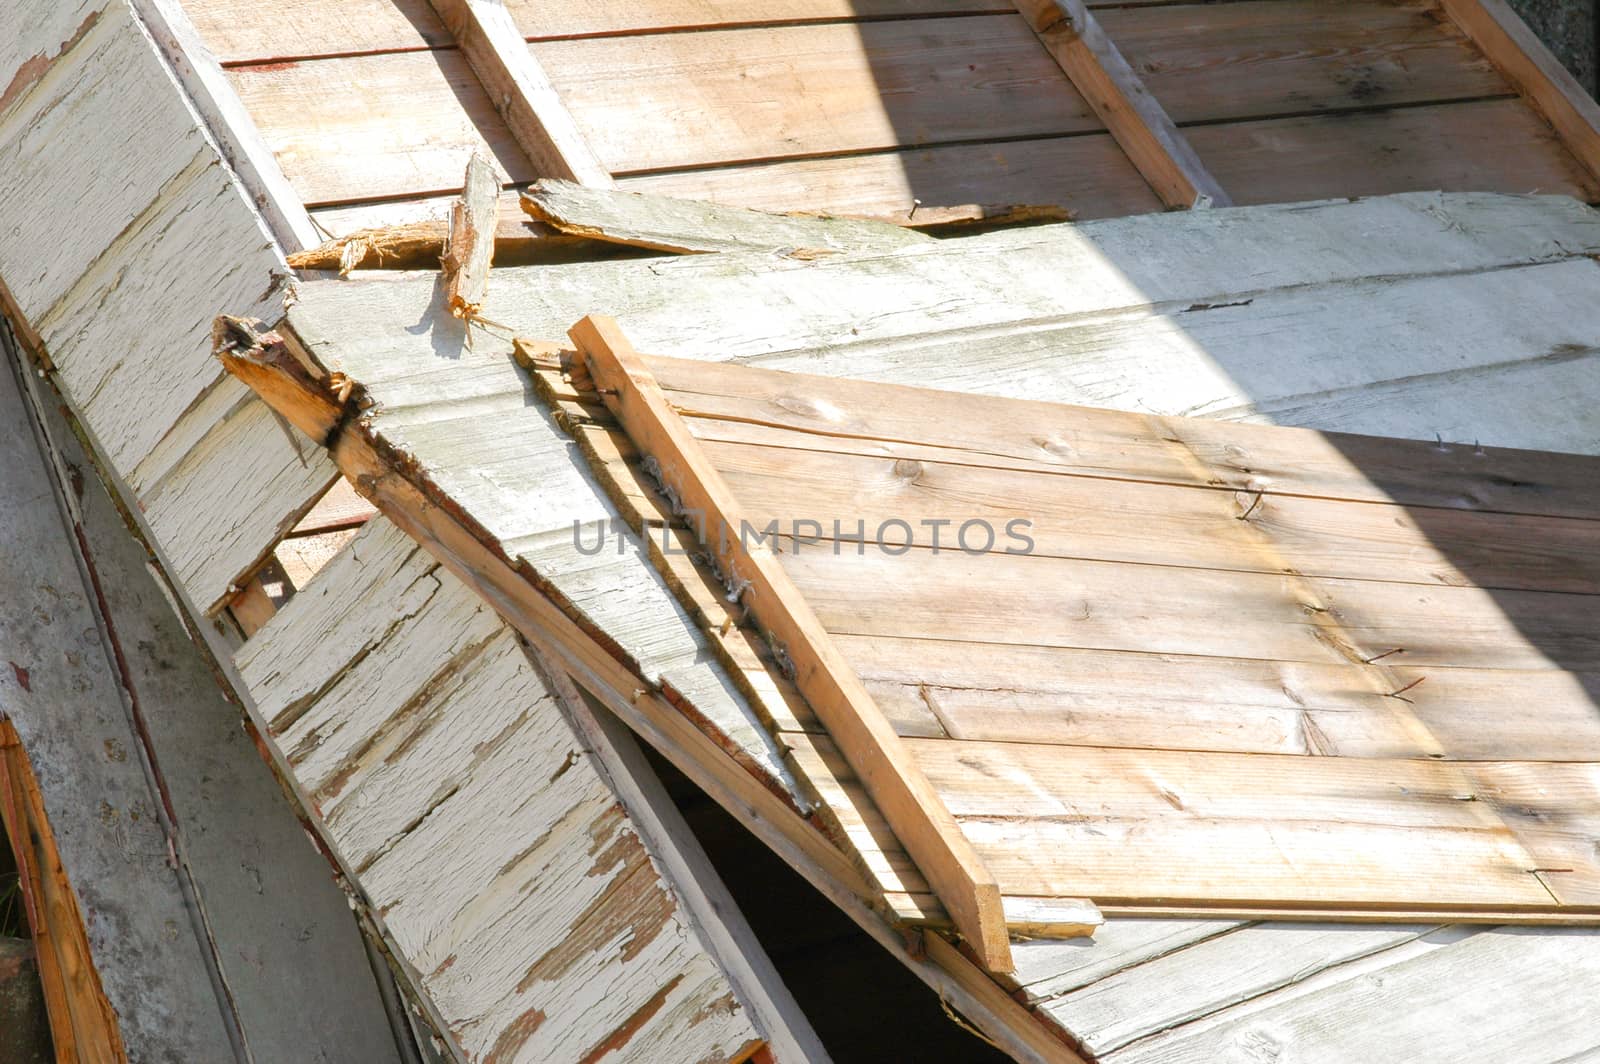 broken wood panels from a demolished shack